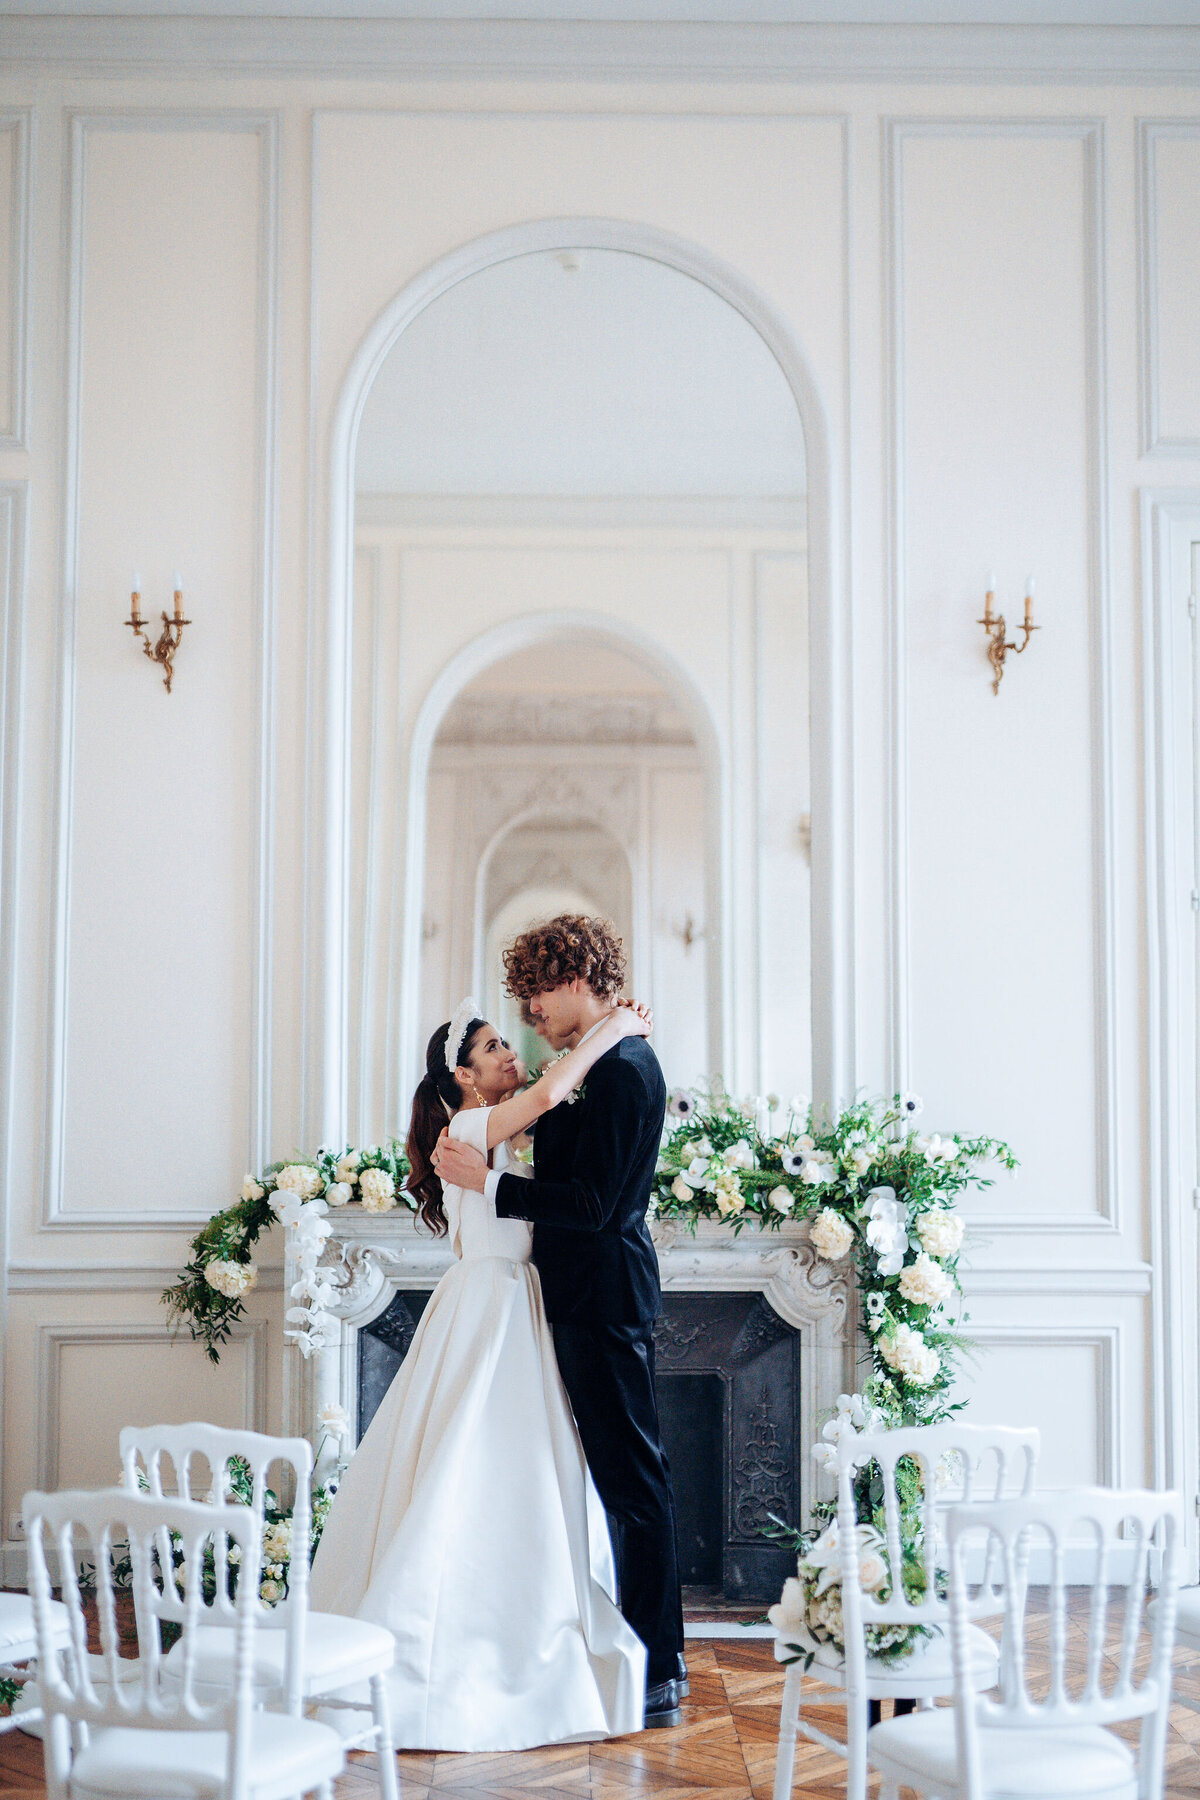 110-Chateau-de-Santeny-Paris-France-Inspiration-Love-Story Elopement-Cinematic-Romance-Destination-Wedding-Editorial-Luxury-Fine-Art-Lisa-Vigliotta-Photography